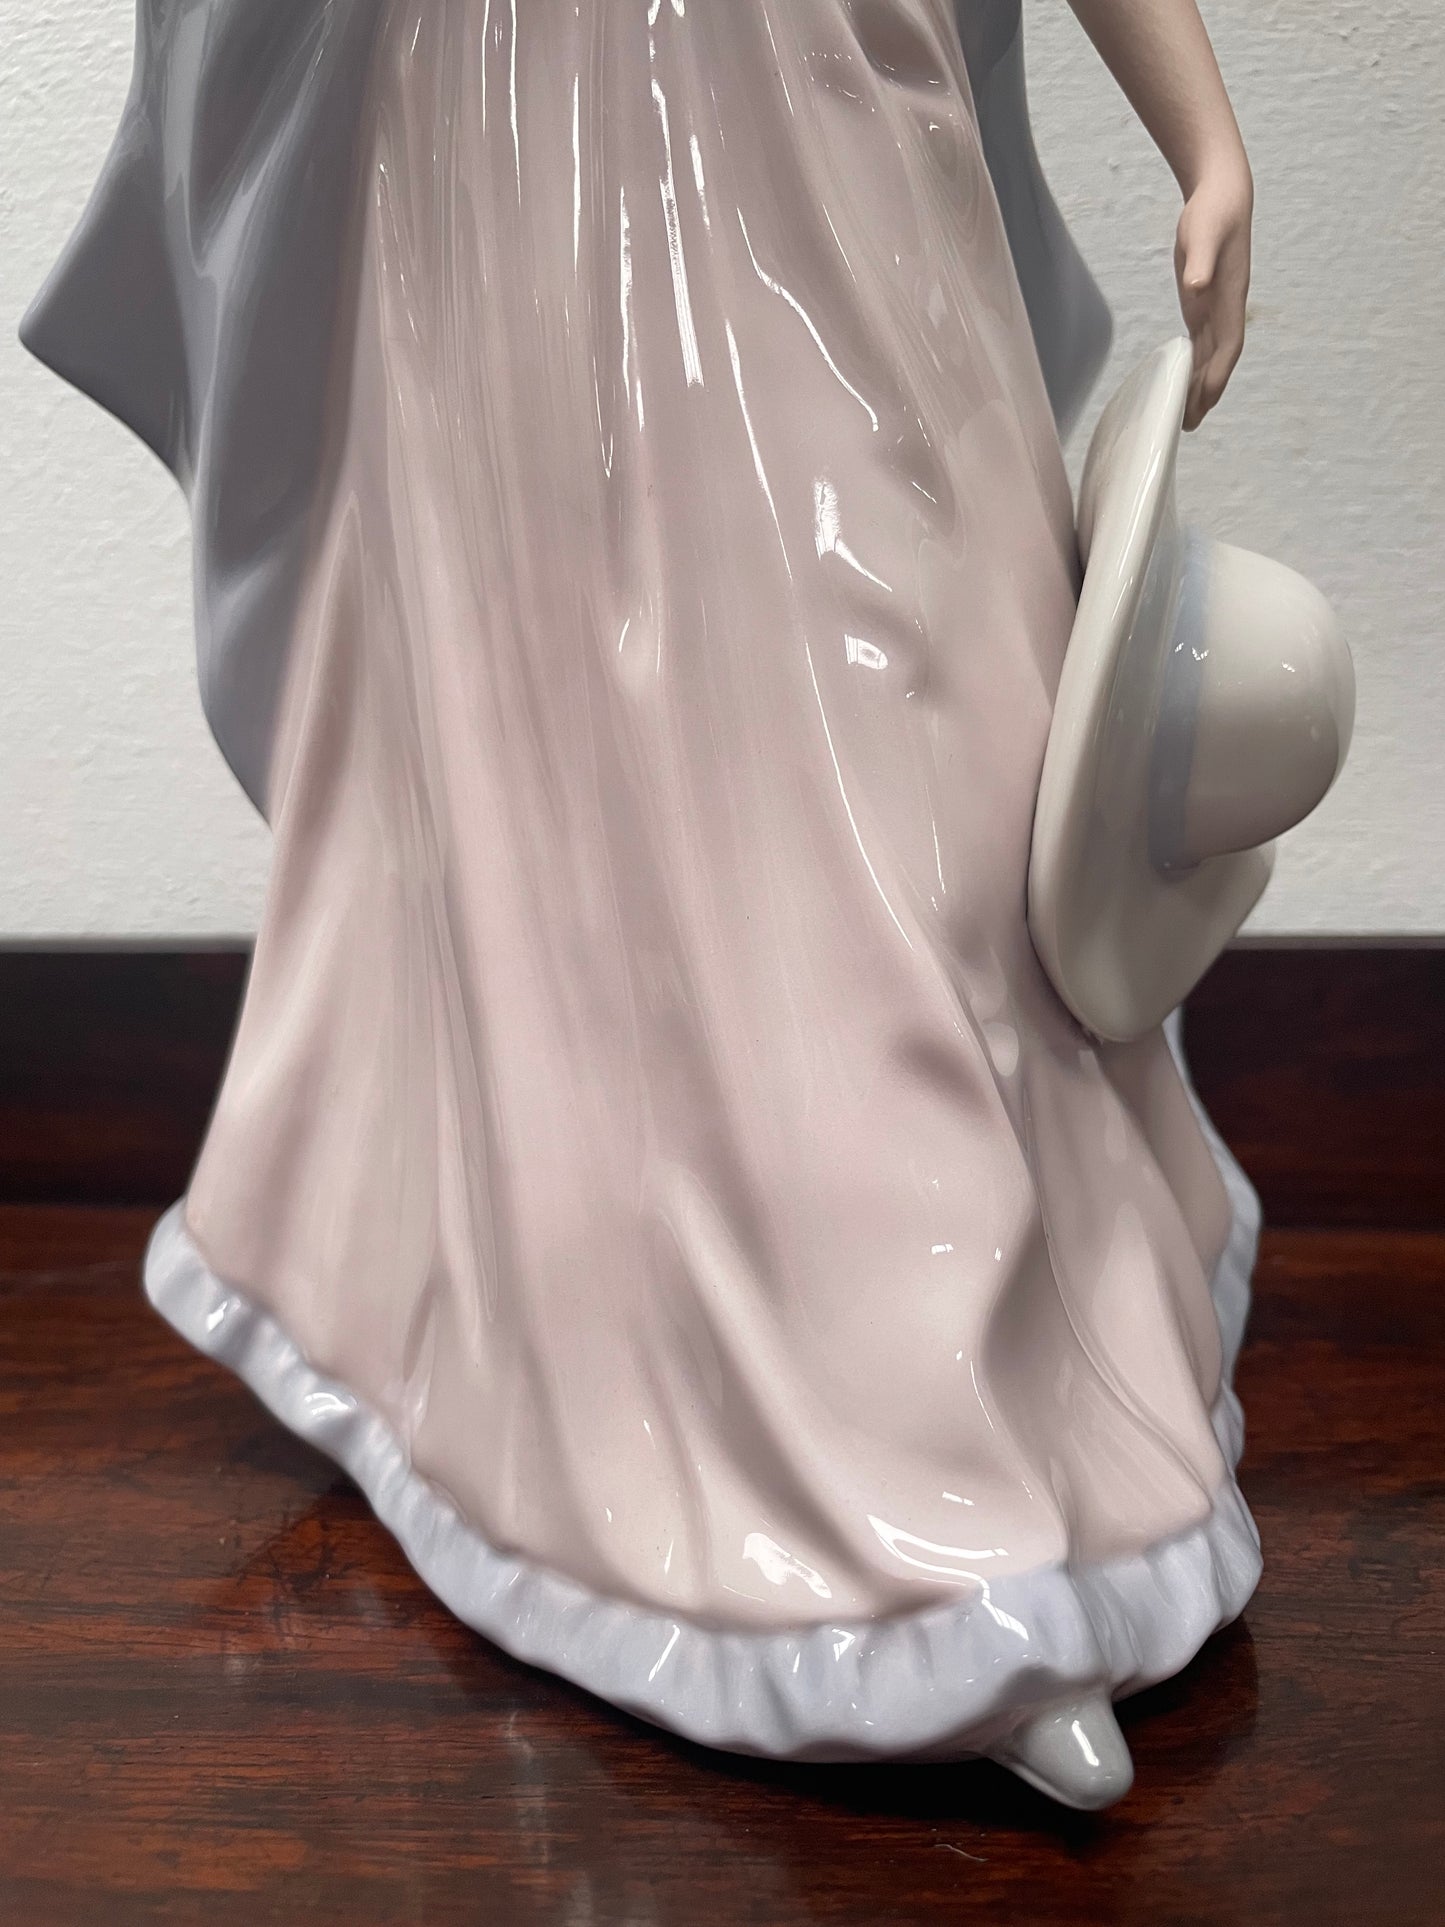 Attractive Large "Nadal" Porcelain Figurine